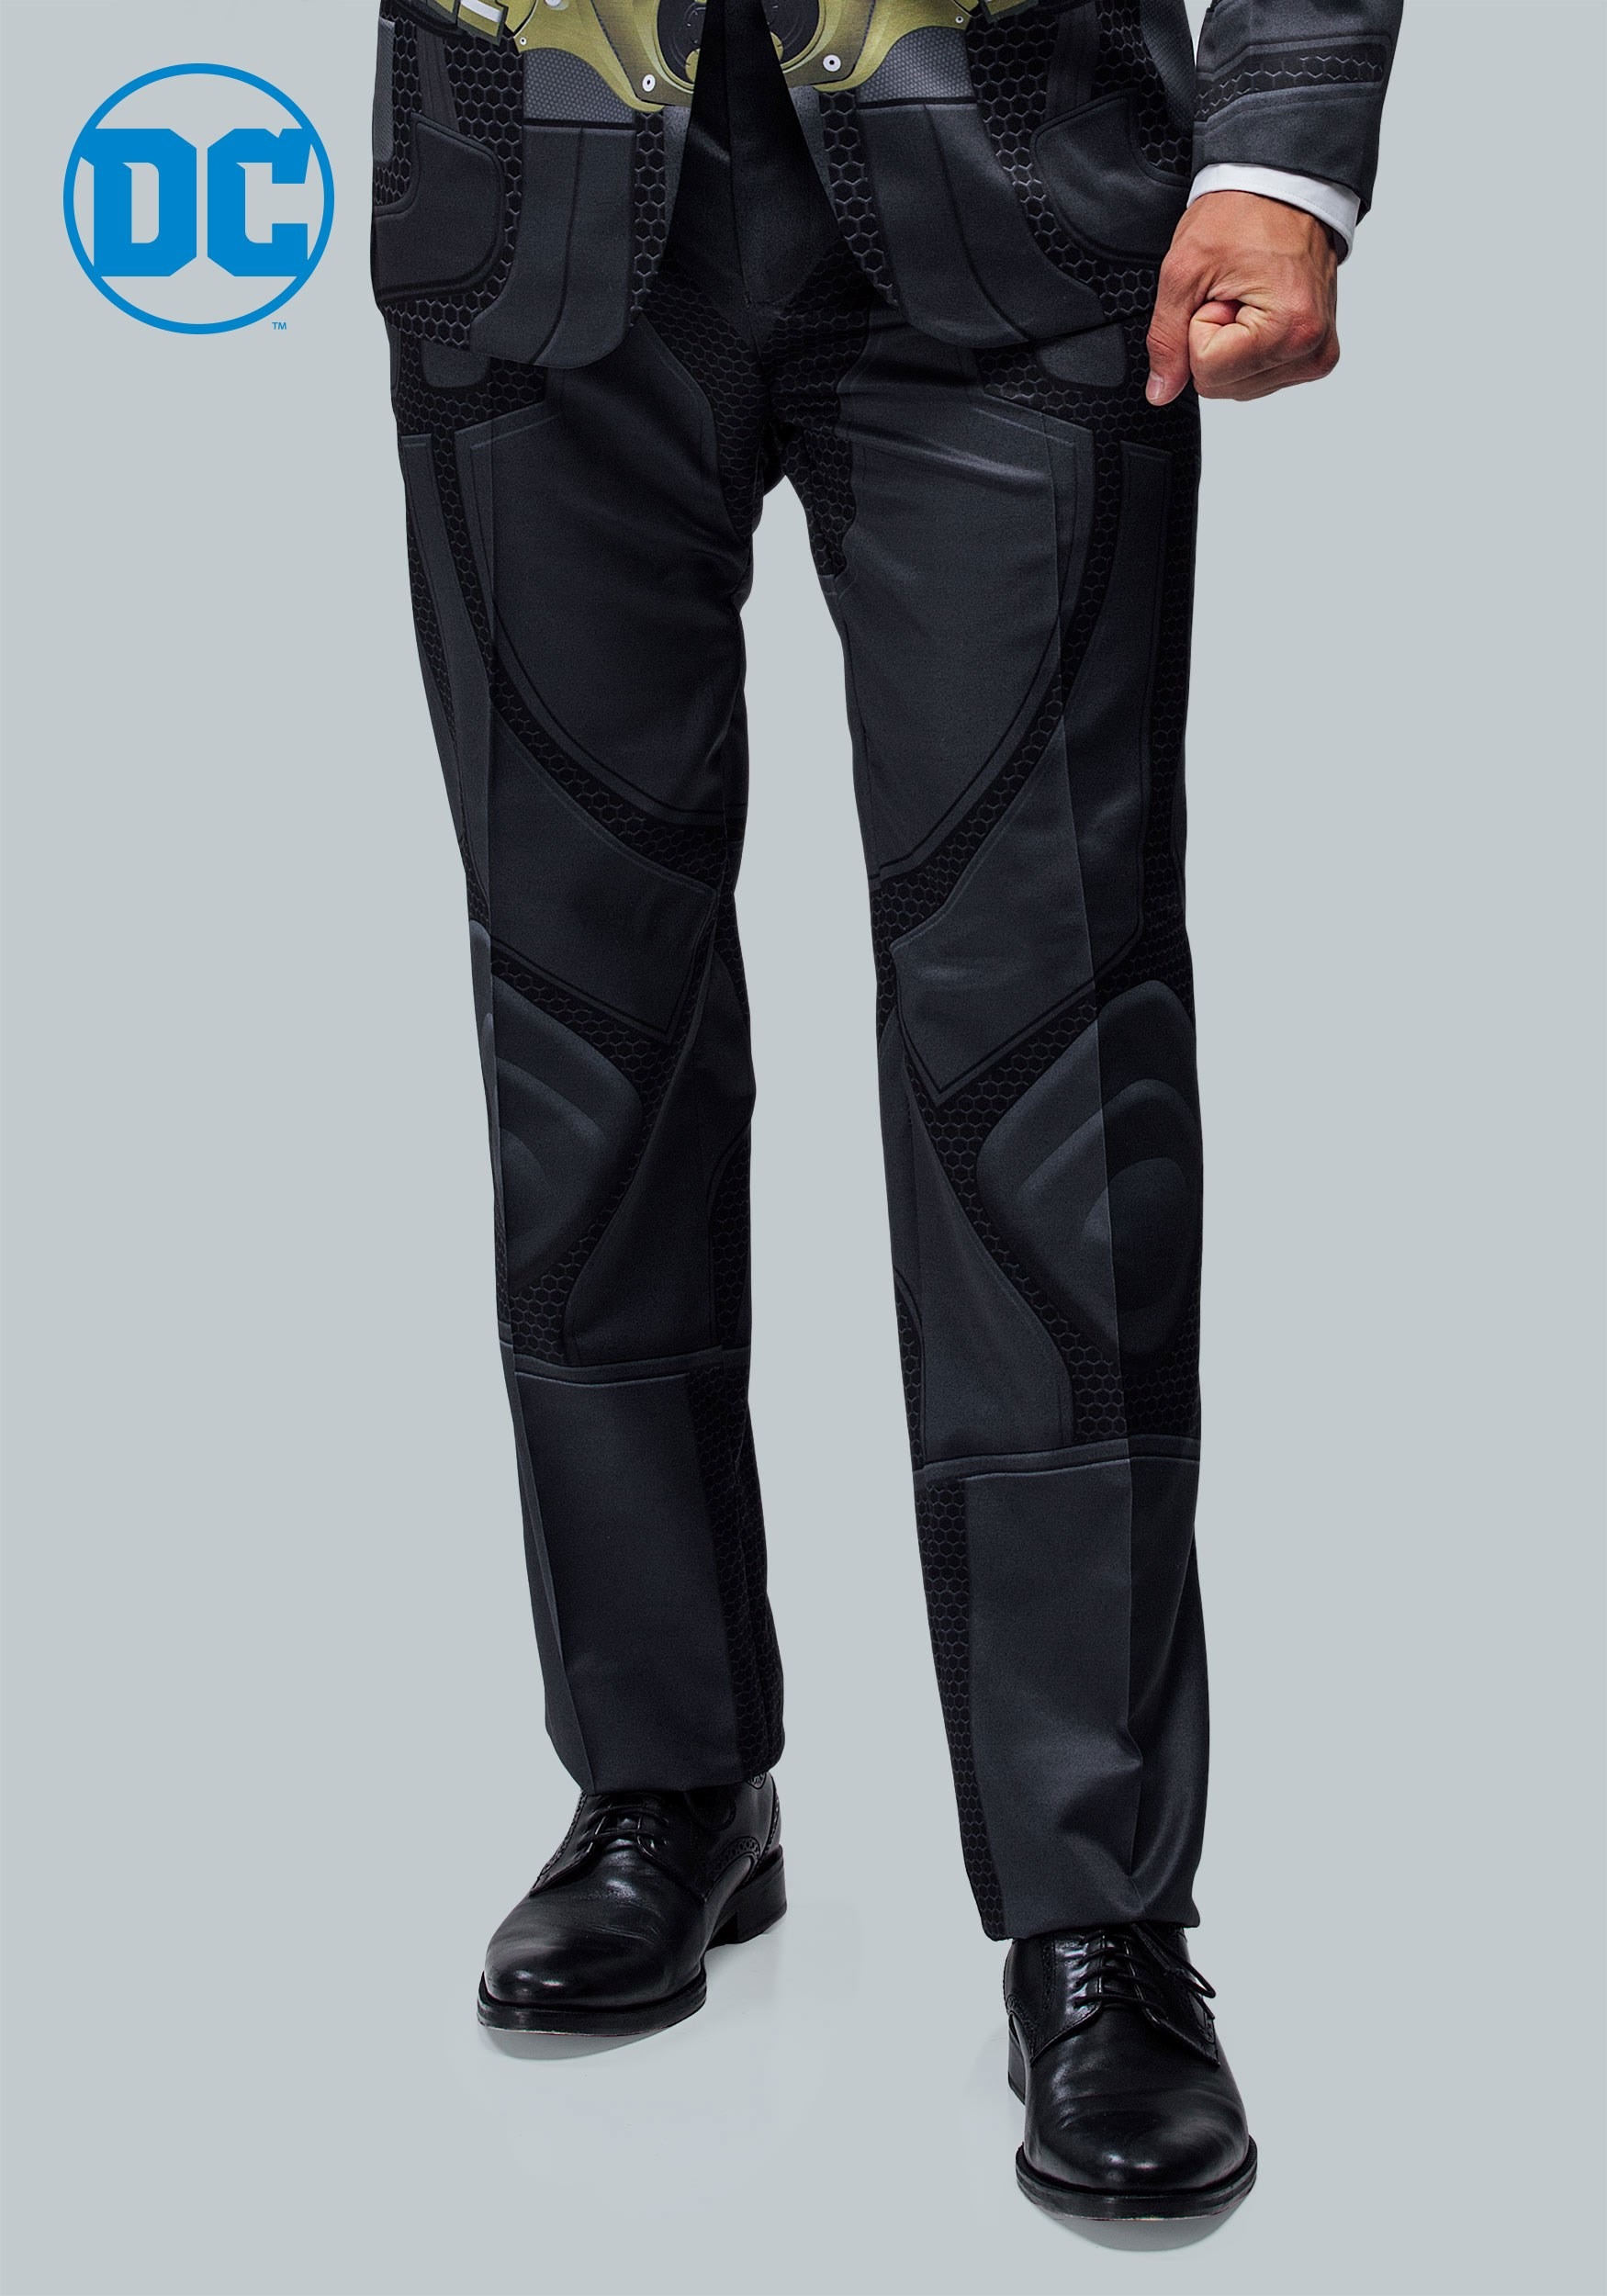 Pantalones de traje de caballero oscuro (alter ego) Multicolor